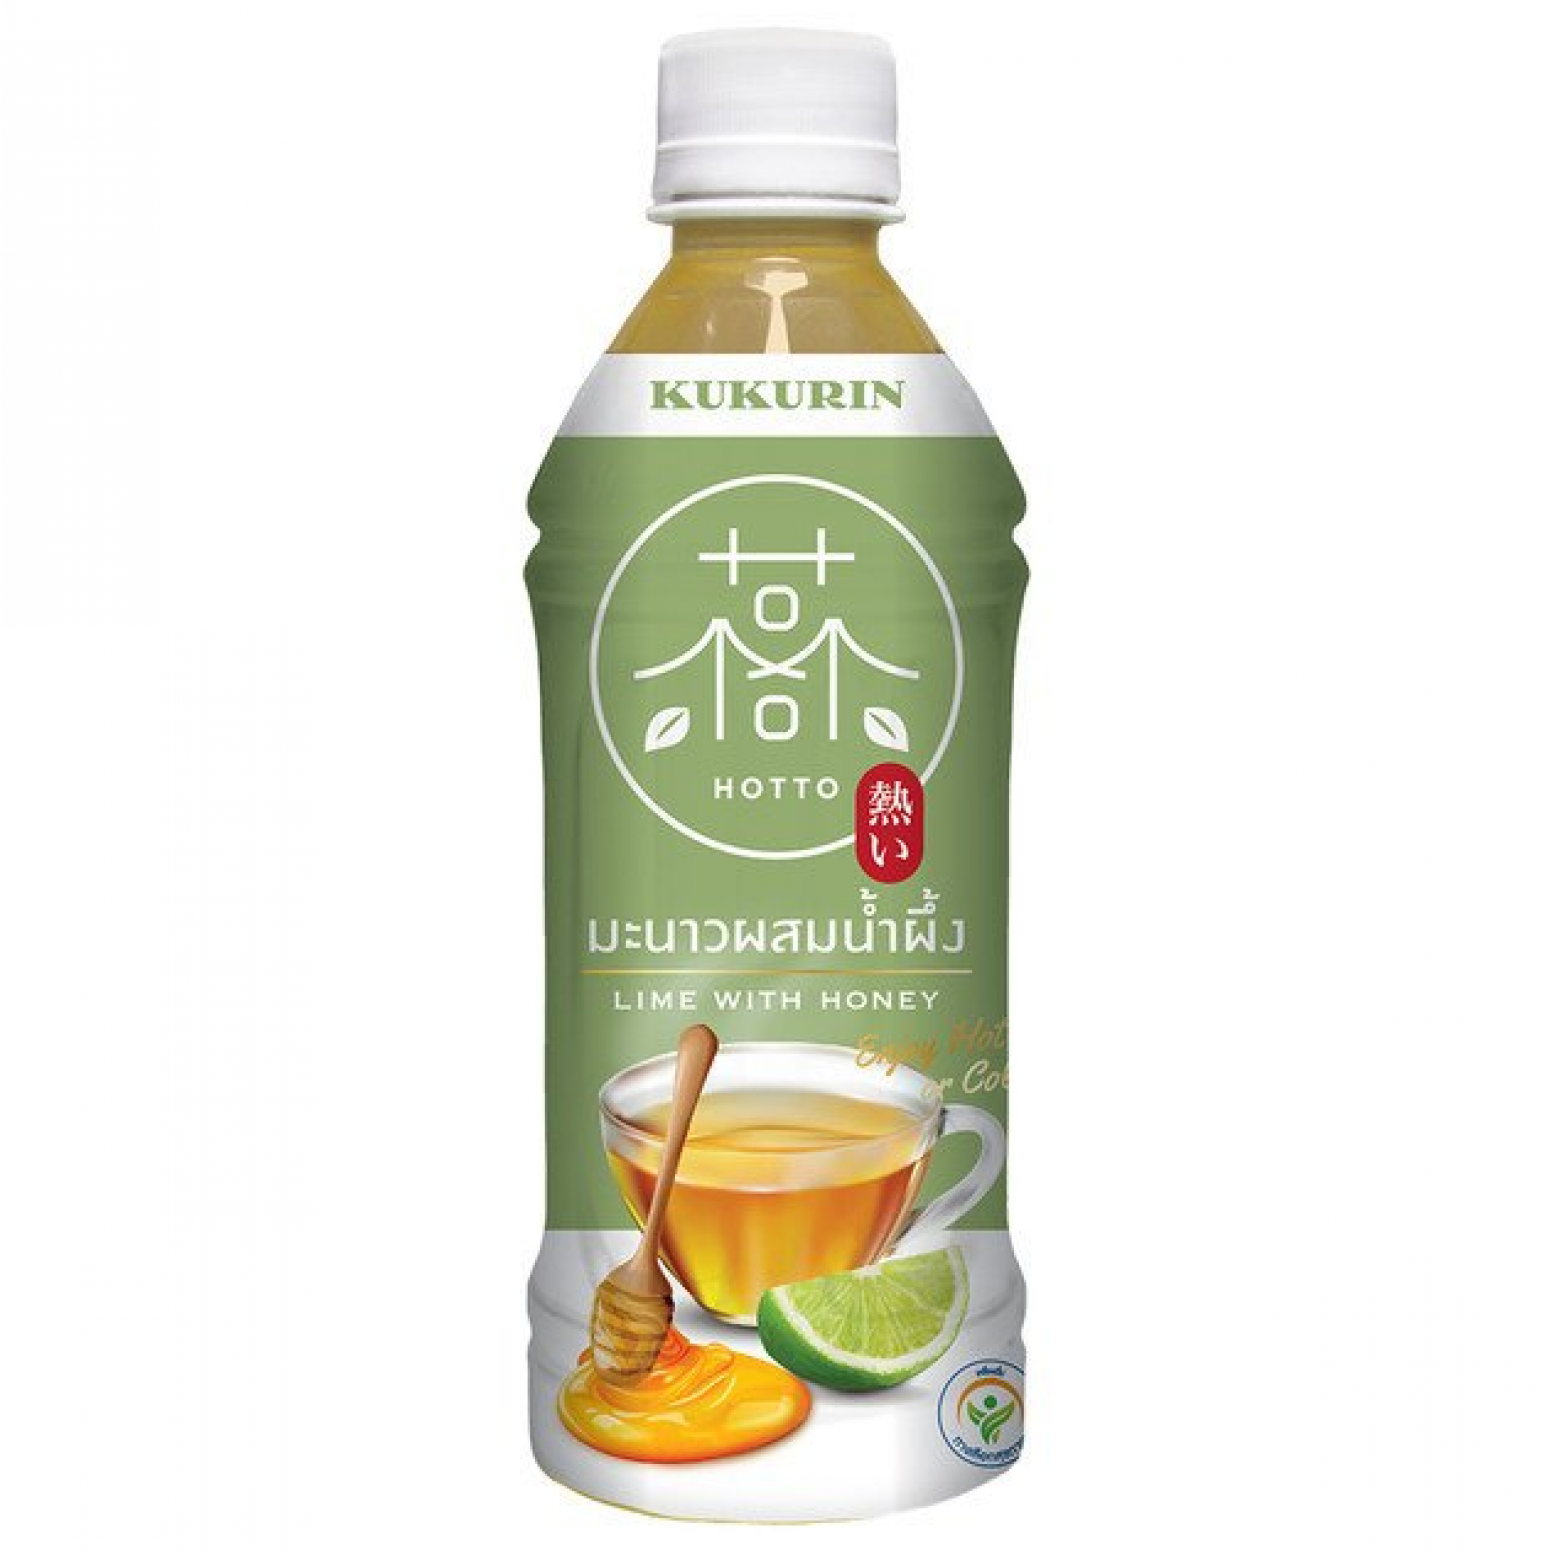 Kukurin Hotto Lime with Honey 350ml.